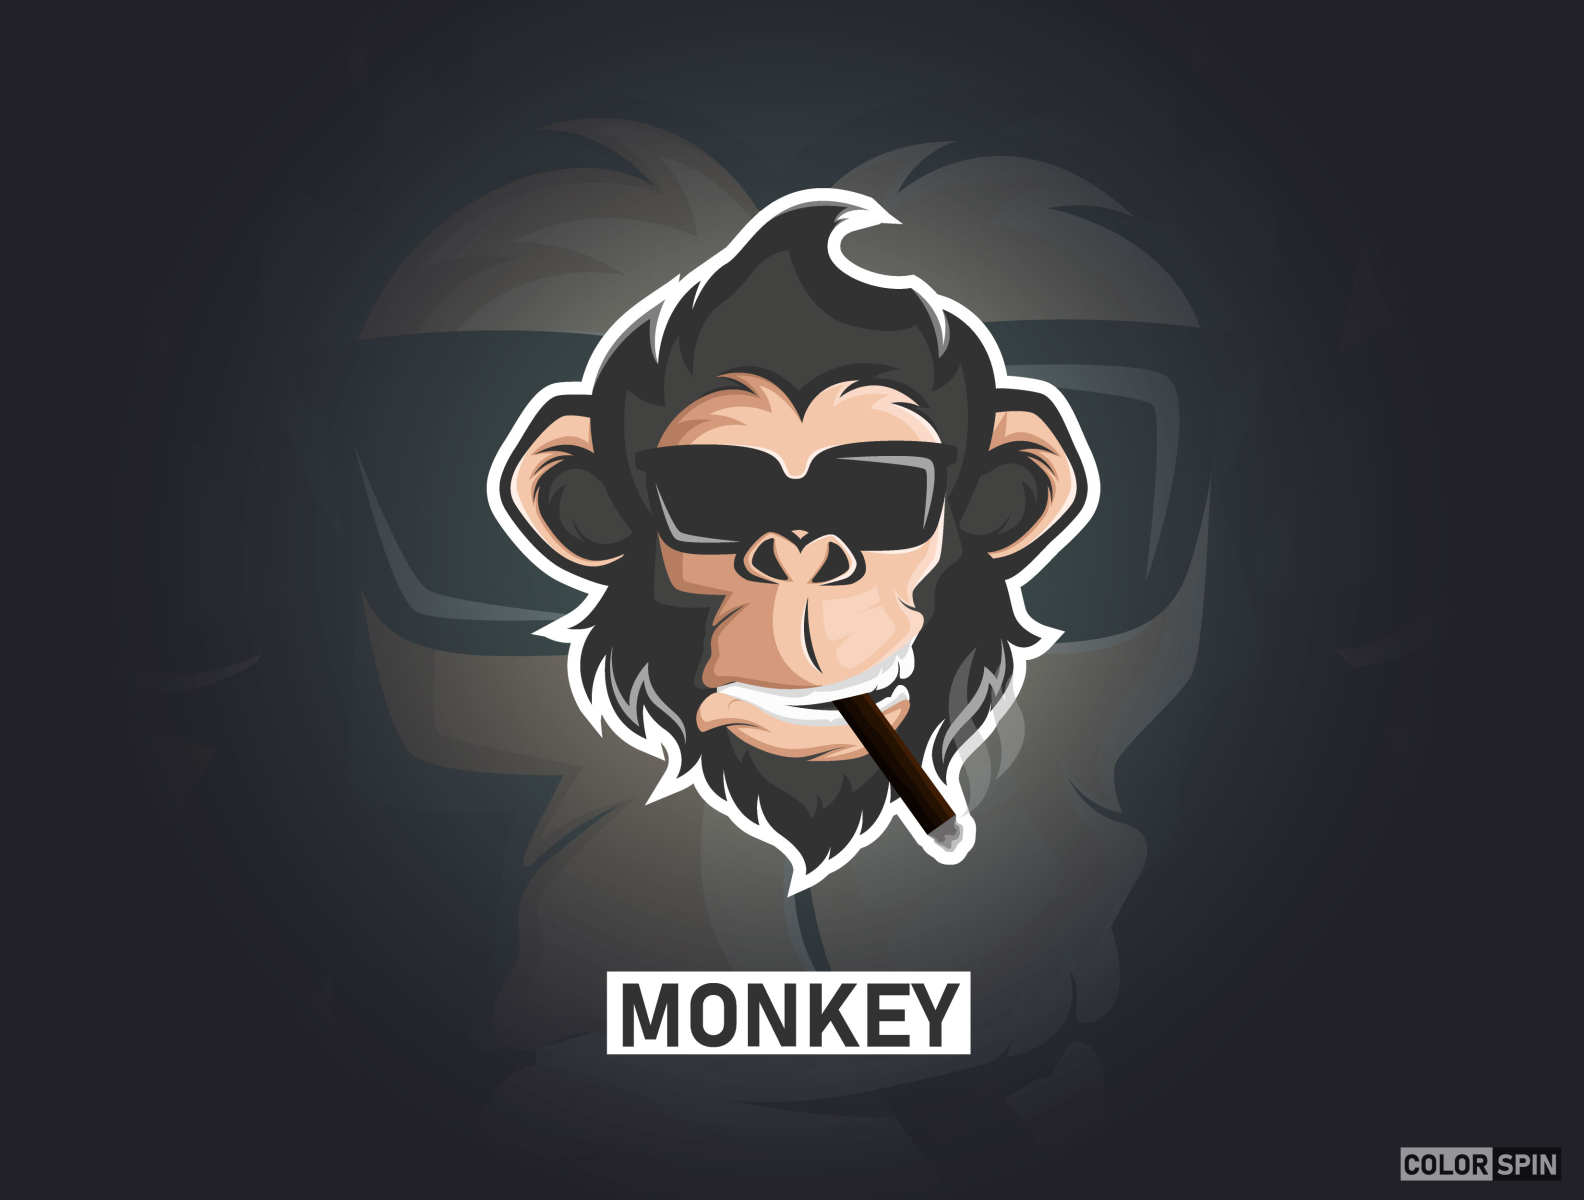 Monkey Mascot Logo by Sadhon Biswas on Dribbble